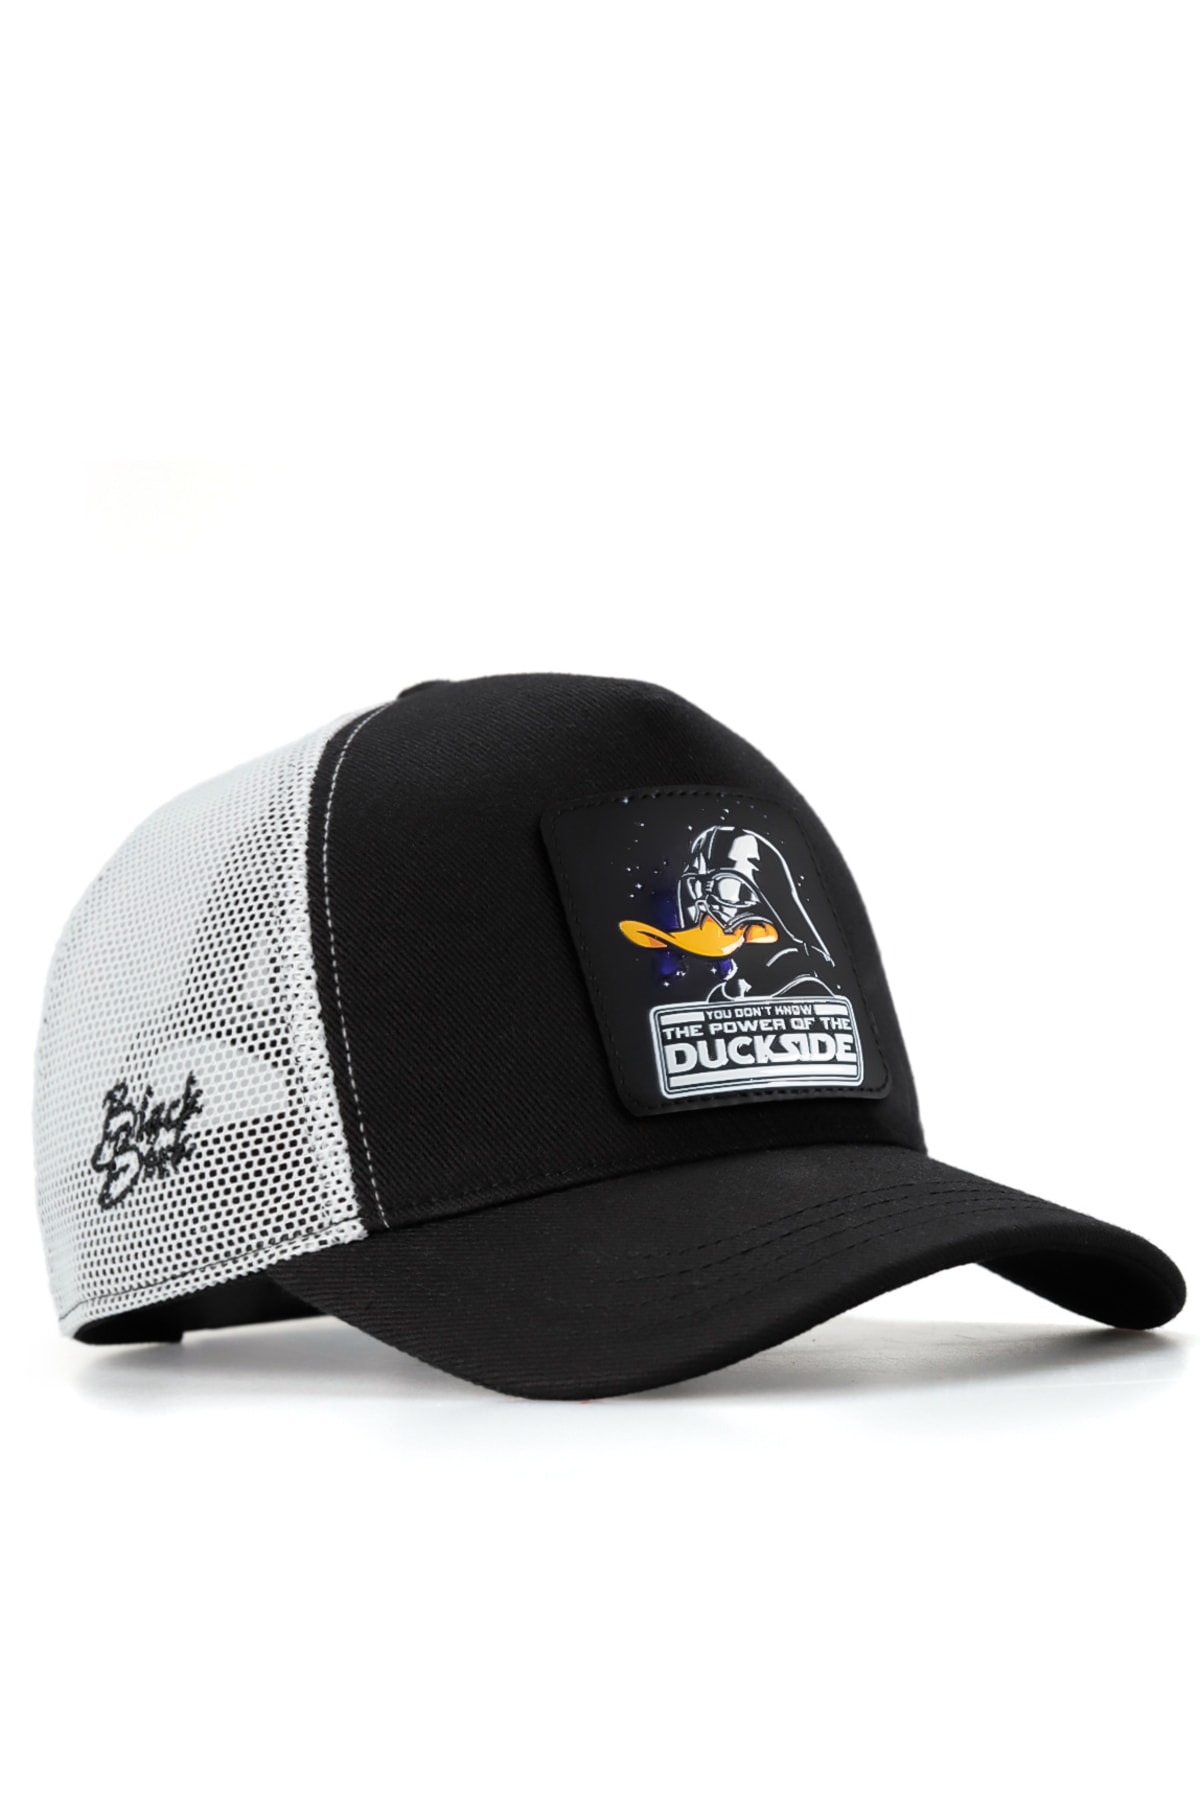 BlackBörk V1 Unisex Trucker Duckside11 Logolu Siyah-Beyaz Cap Şapka